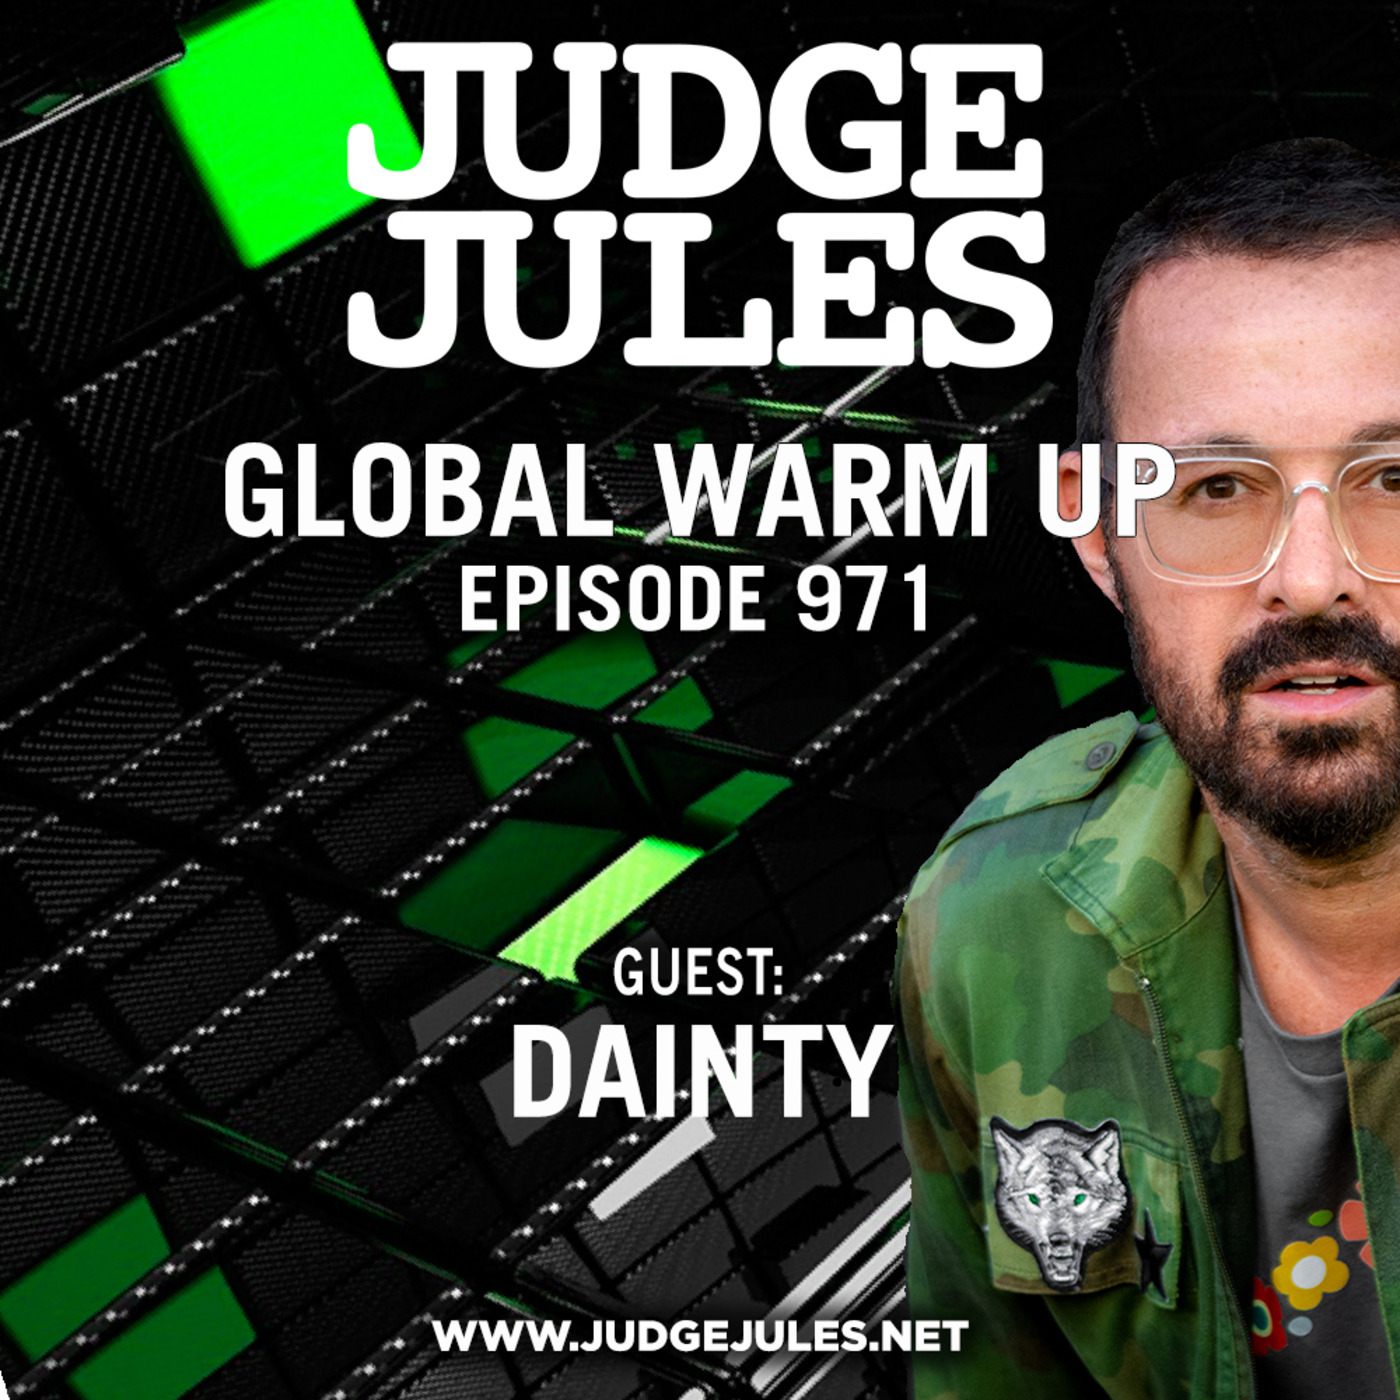 Episode 971: JUDGE JULES PRESENTS THE GLOBAL WARM UP EPISODE 971